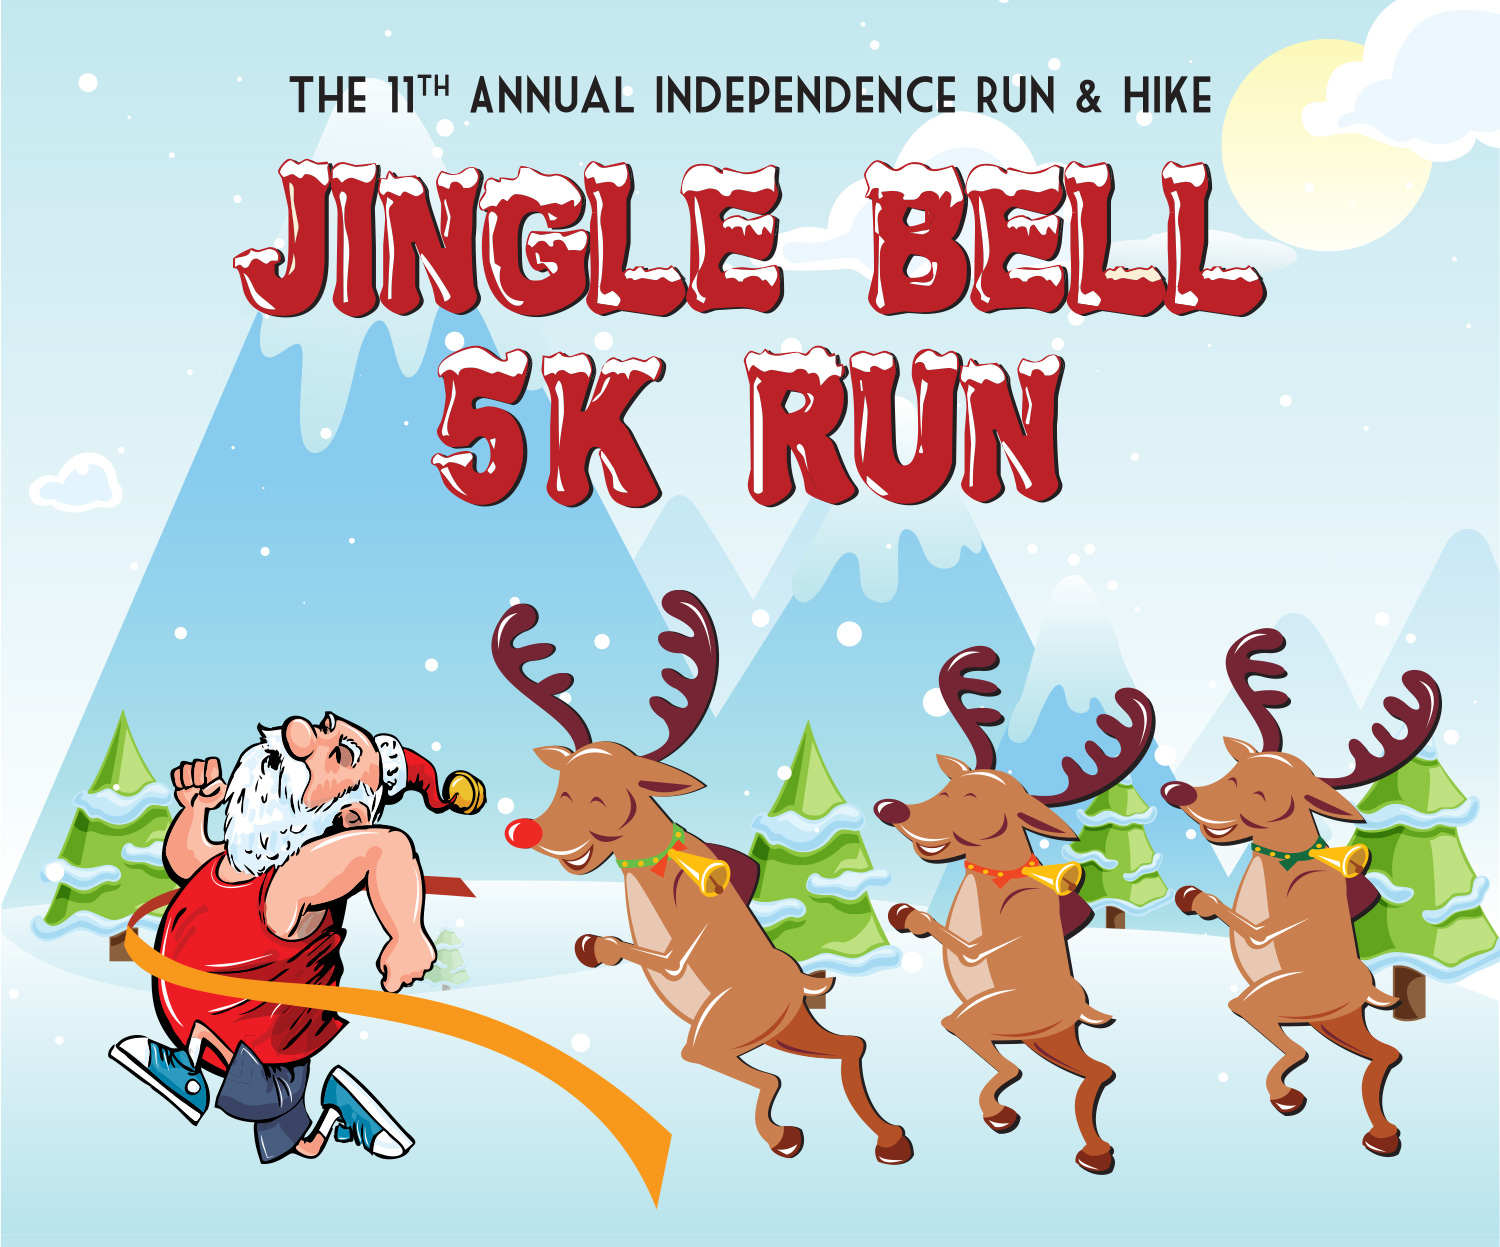 11th Annual Jingle Bell Run December 22nd Independence Run & Hike